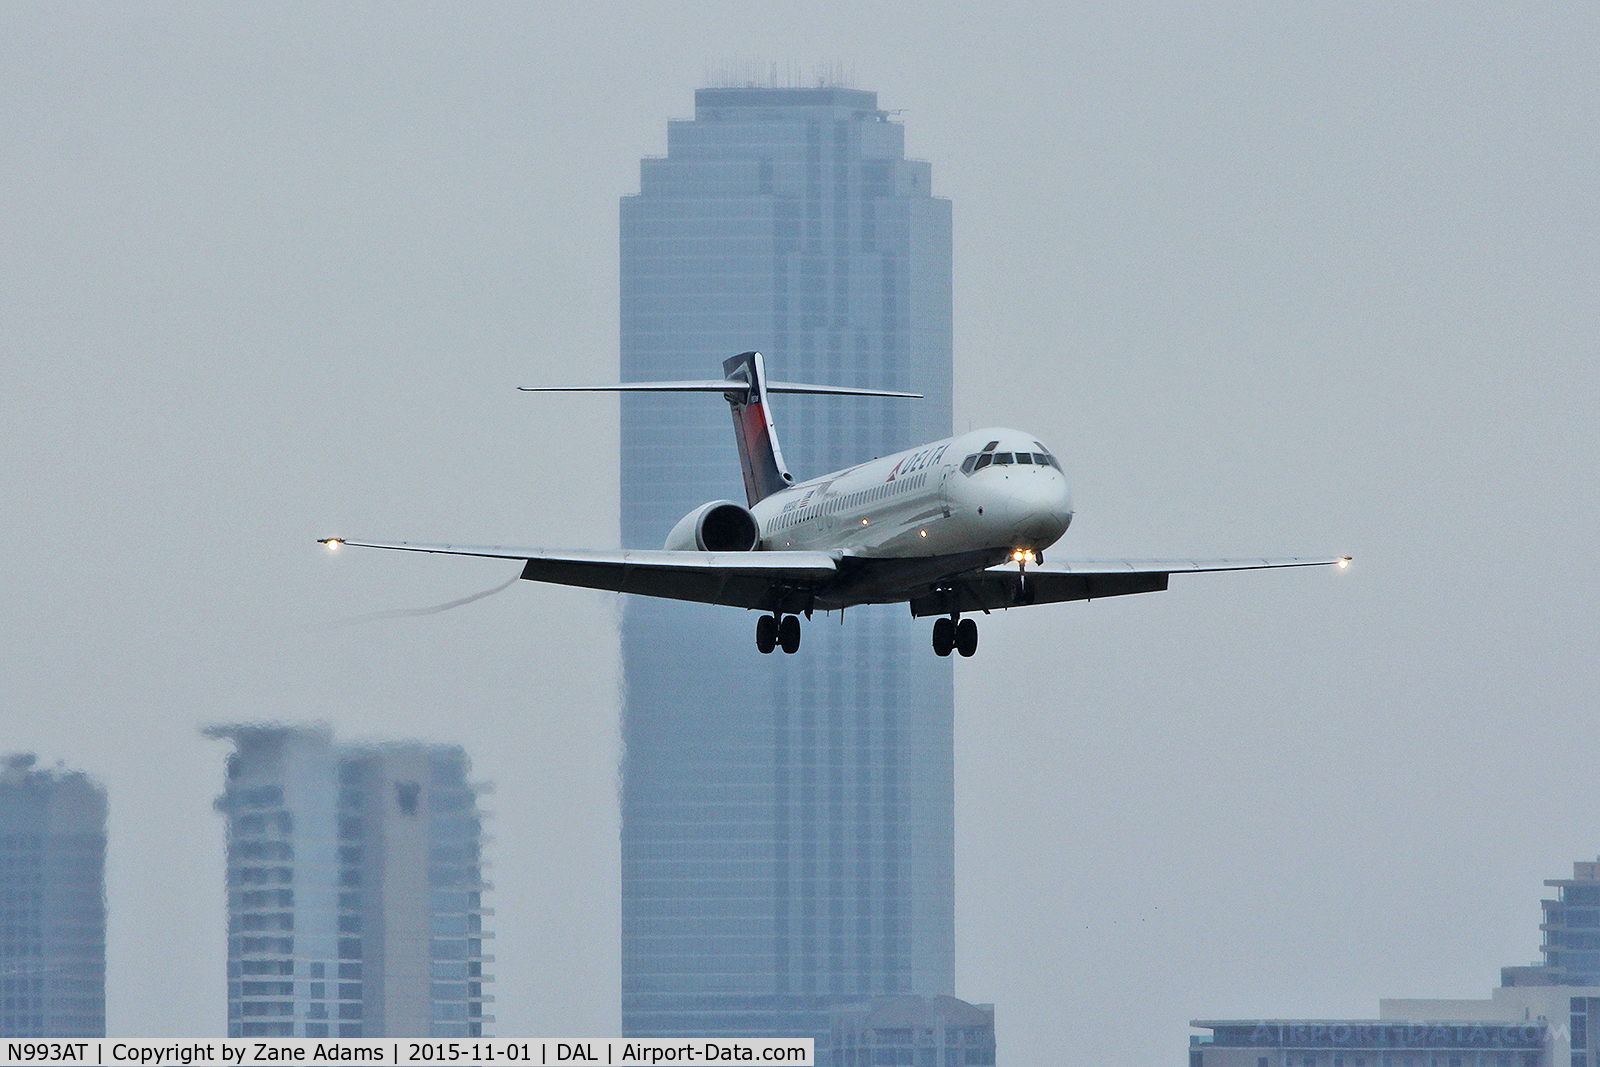 N993AT, 2002 Boeing 717-200 C/N 55137, Delta 717 arriving at Dallas Love Field